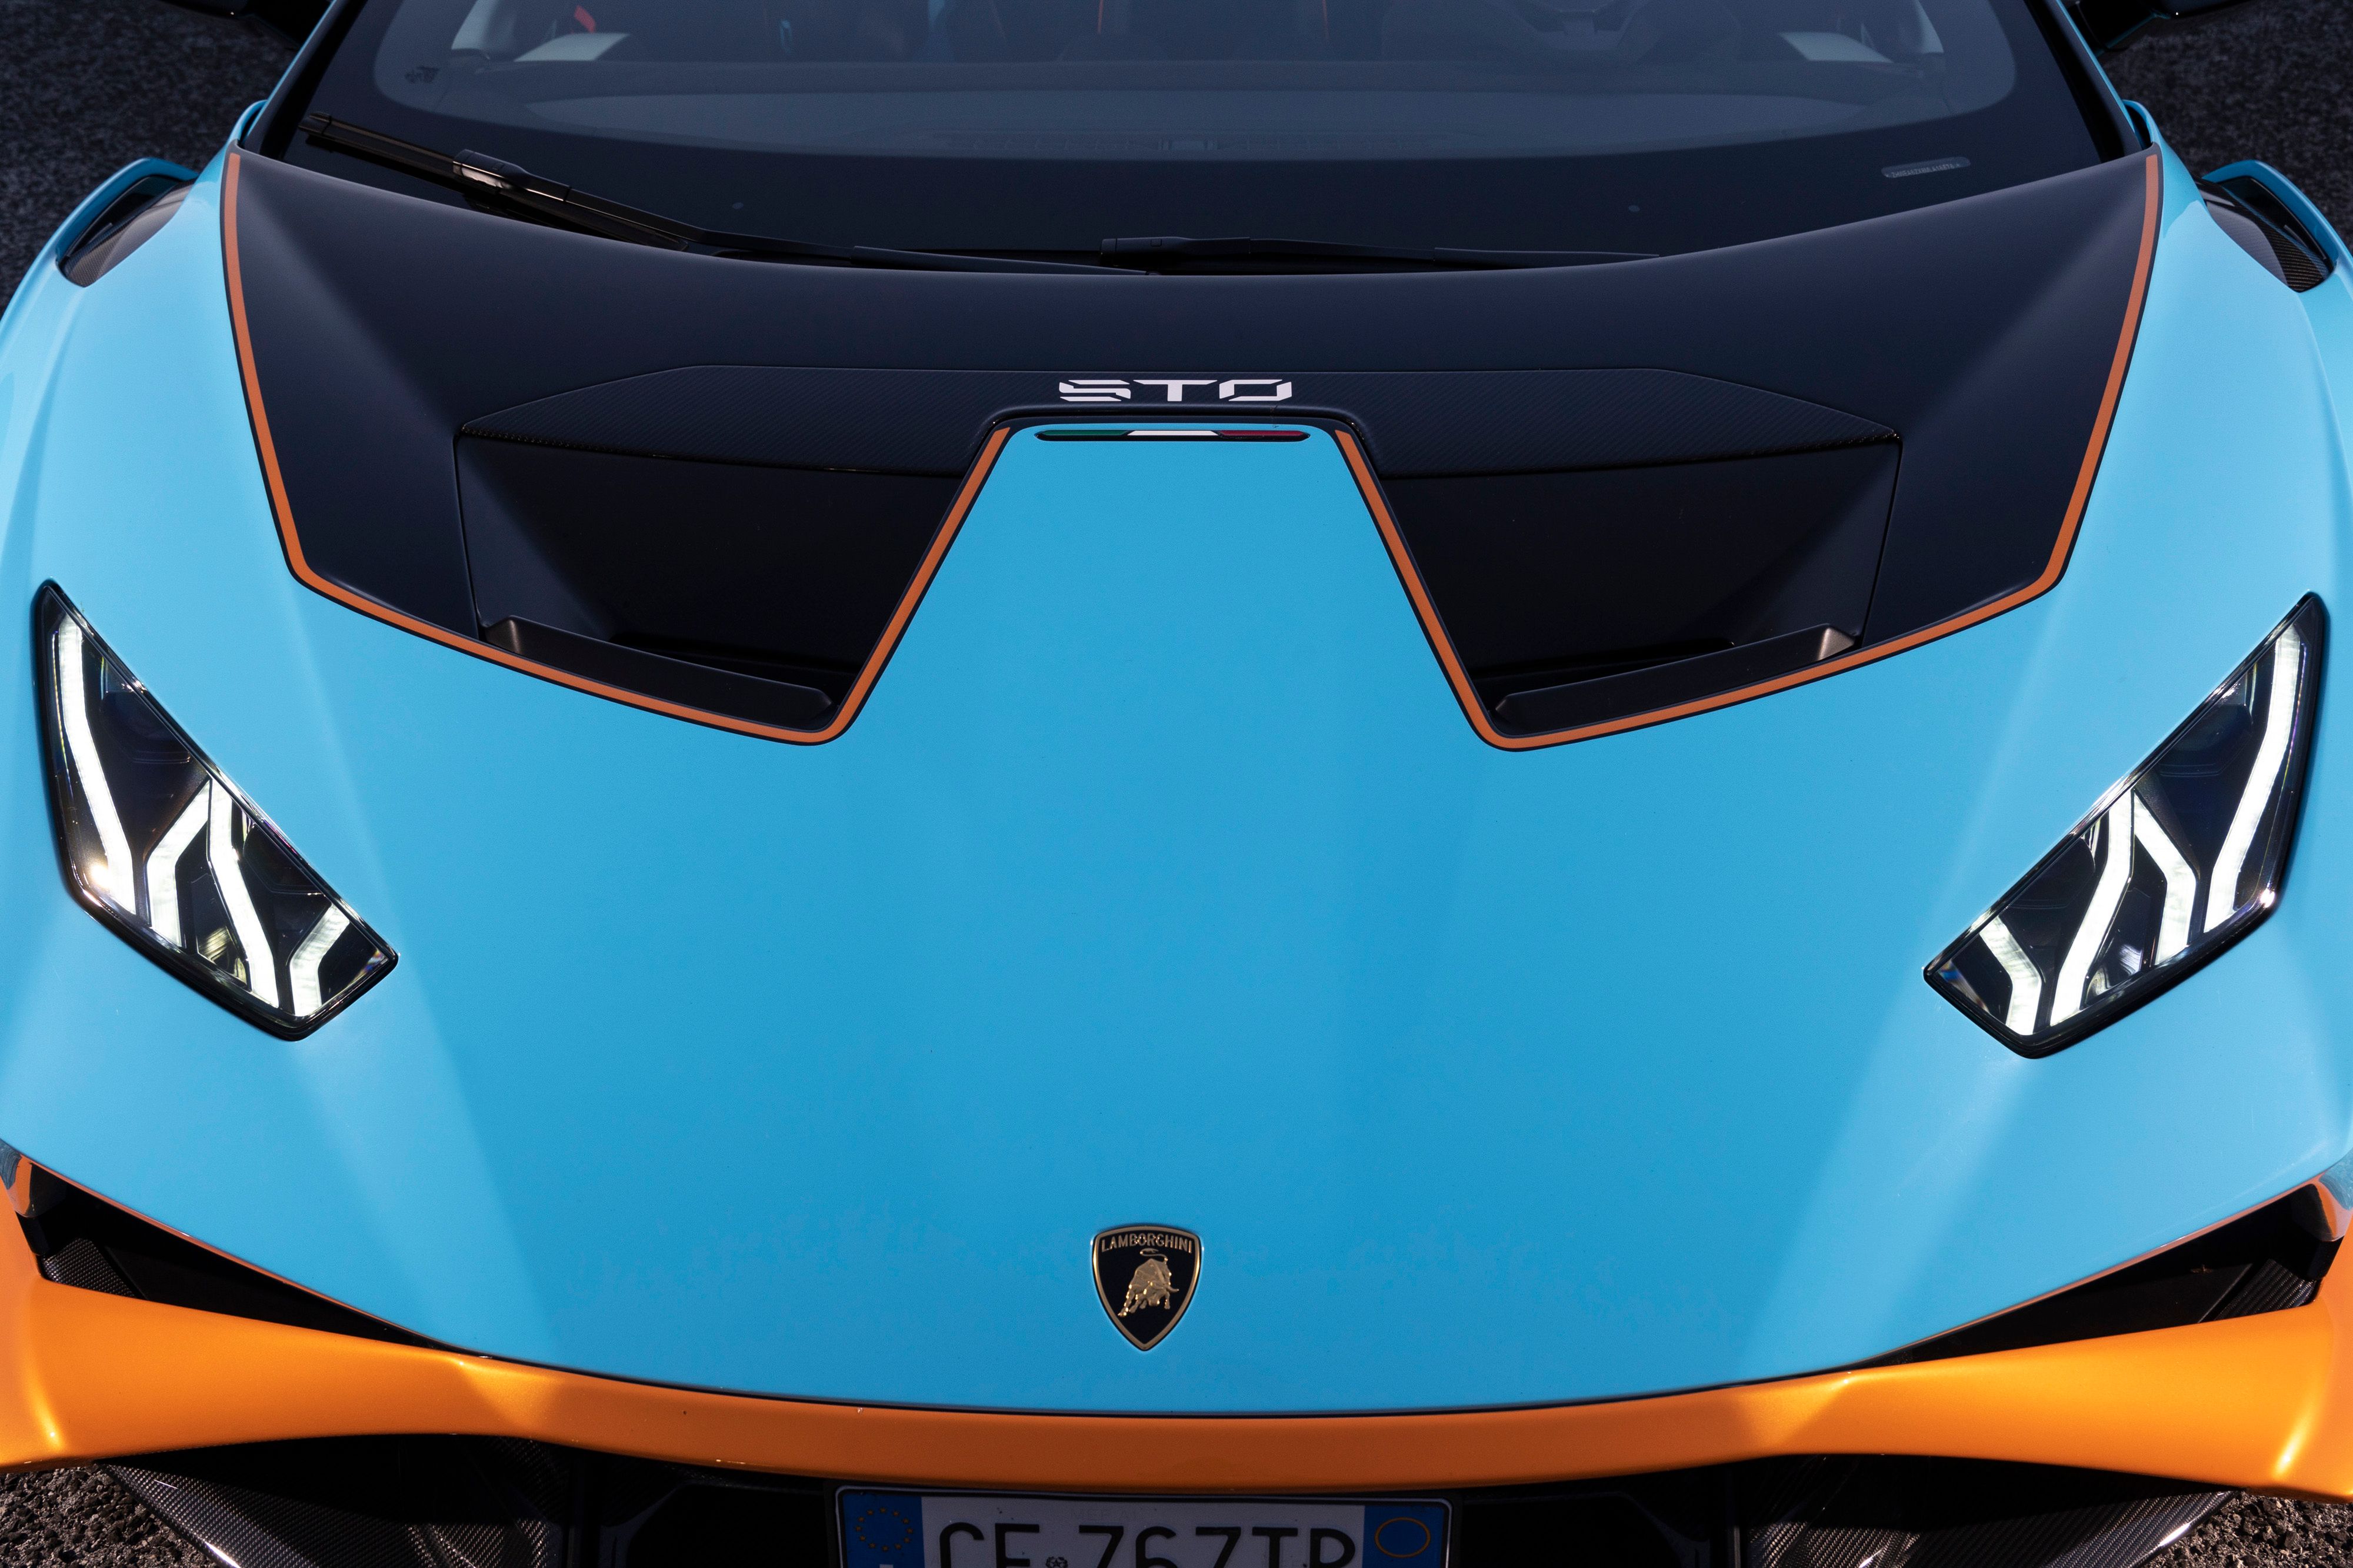 2021 Lamborghini Huracan STO